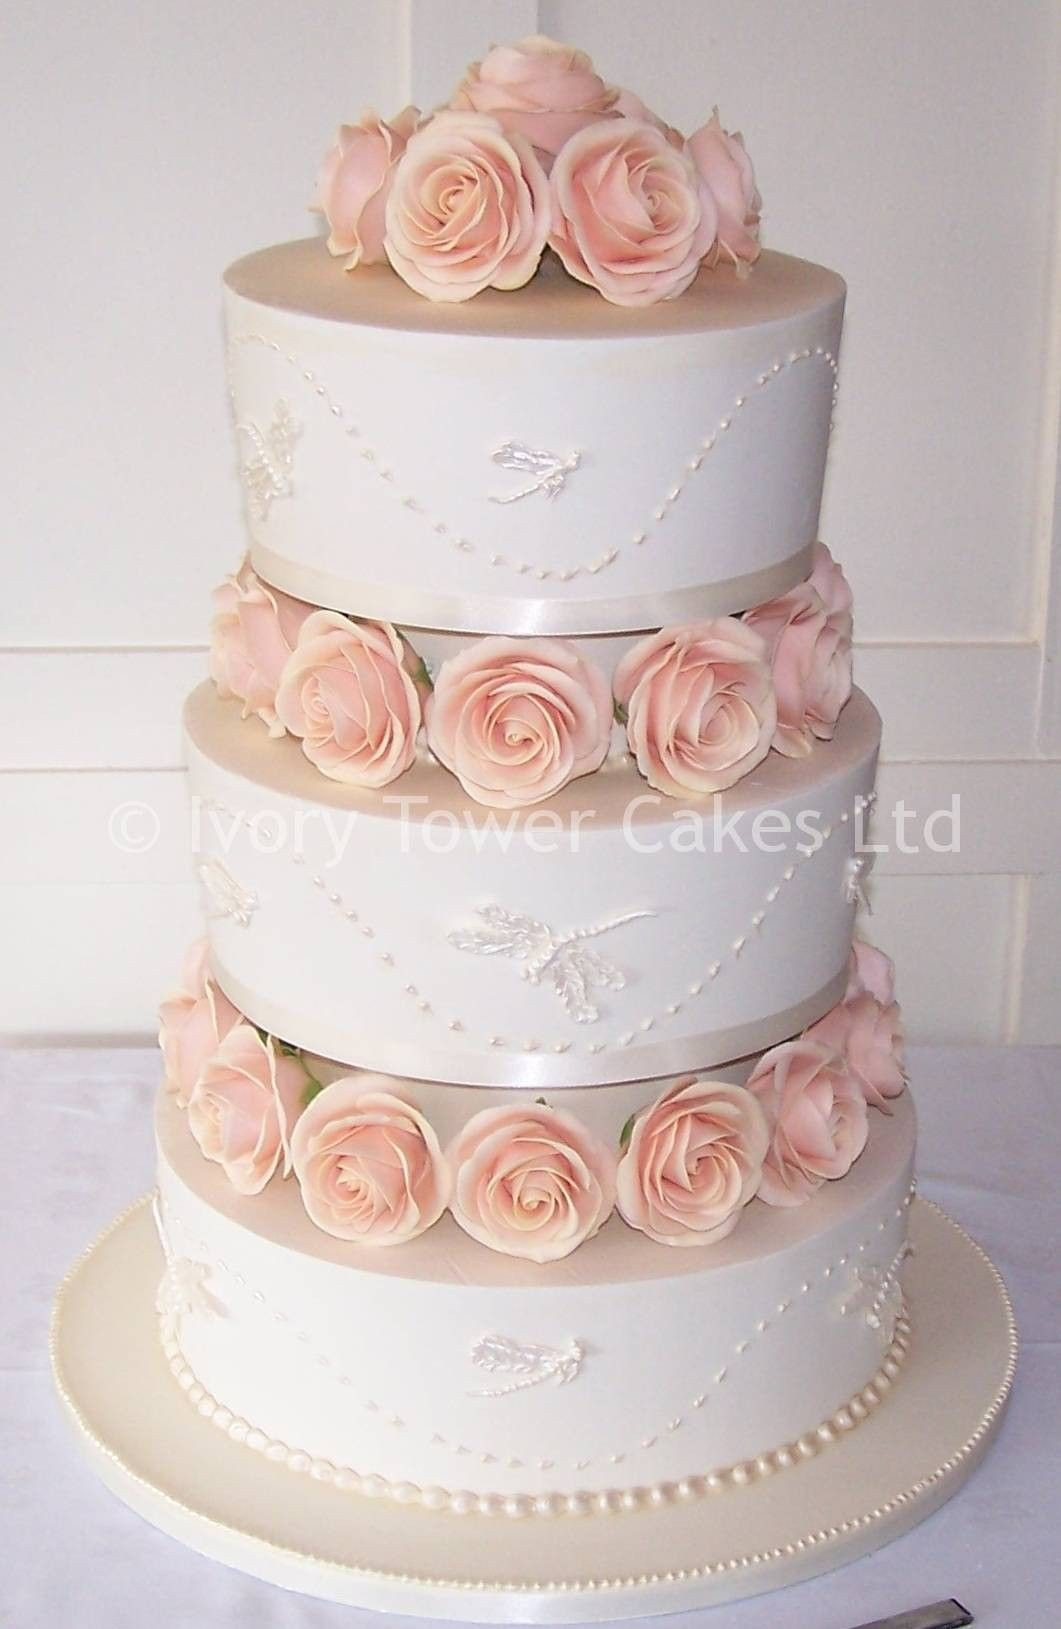 3 Tier Wedding Cakes Prices
 small 3 tier wedding cakes